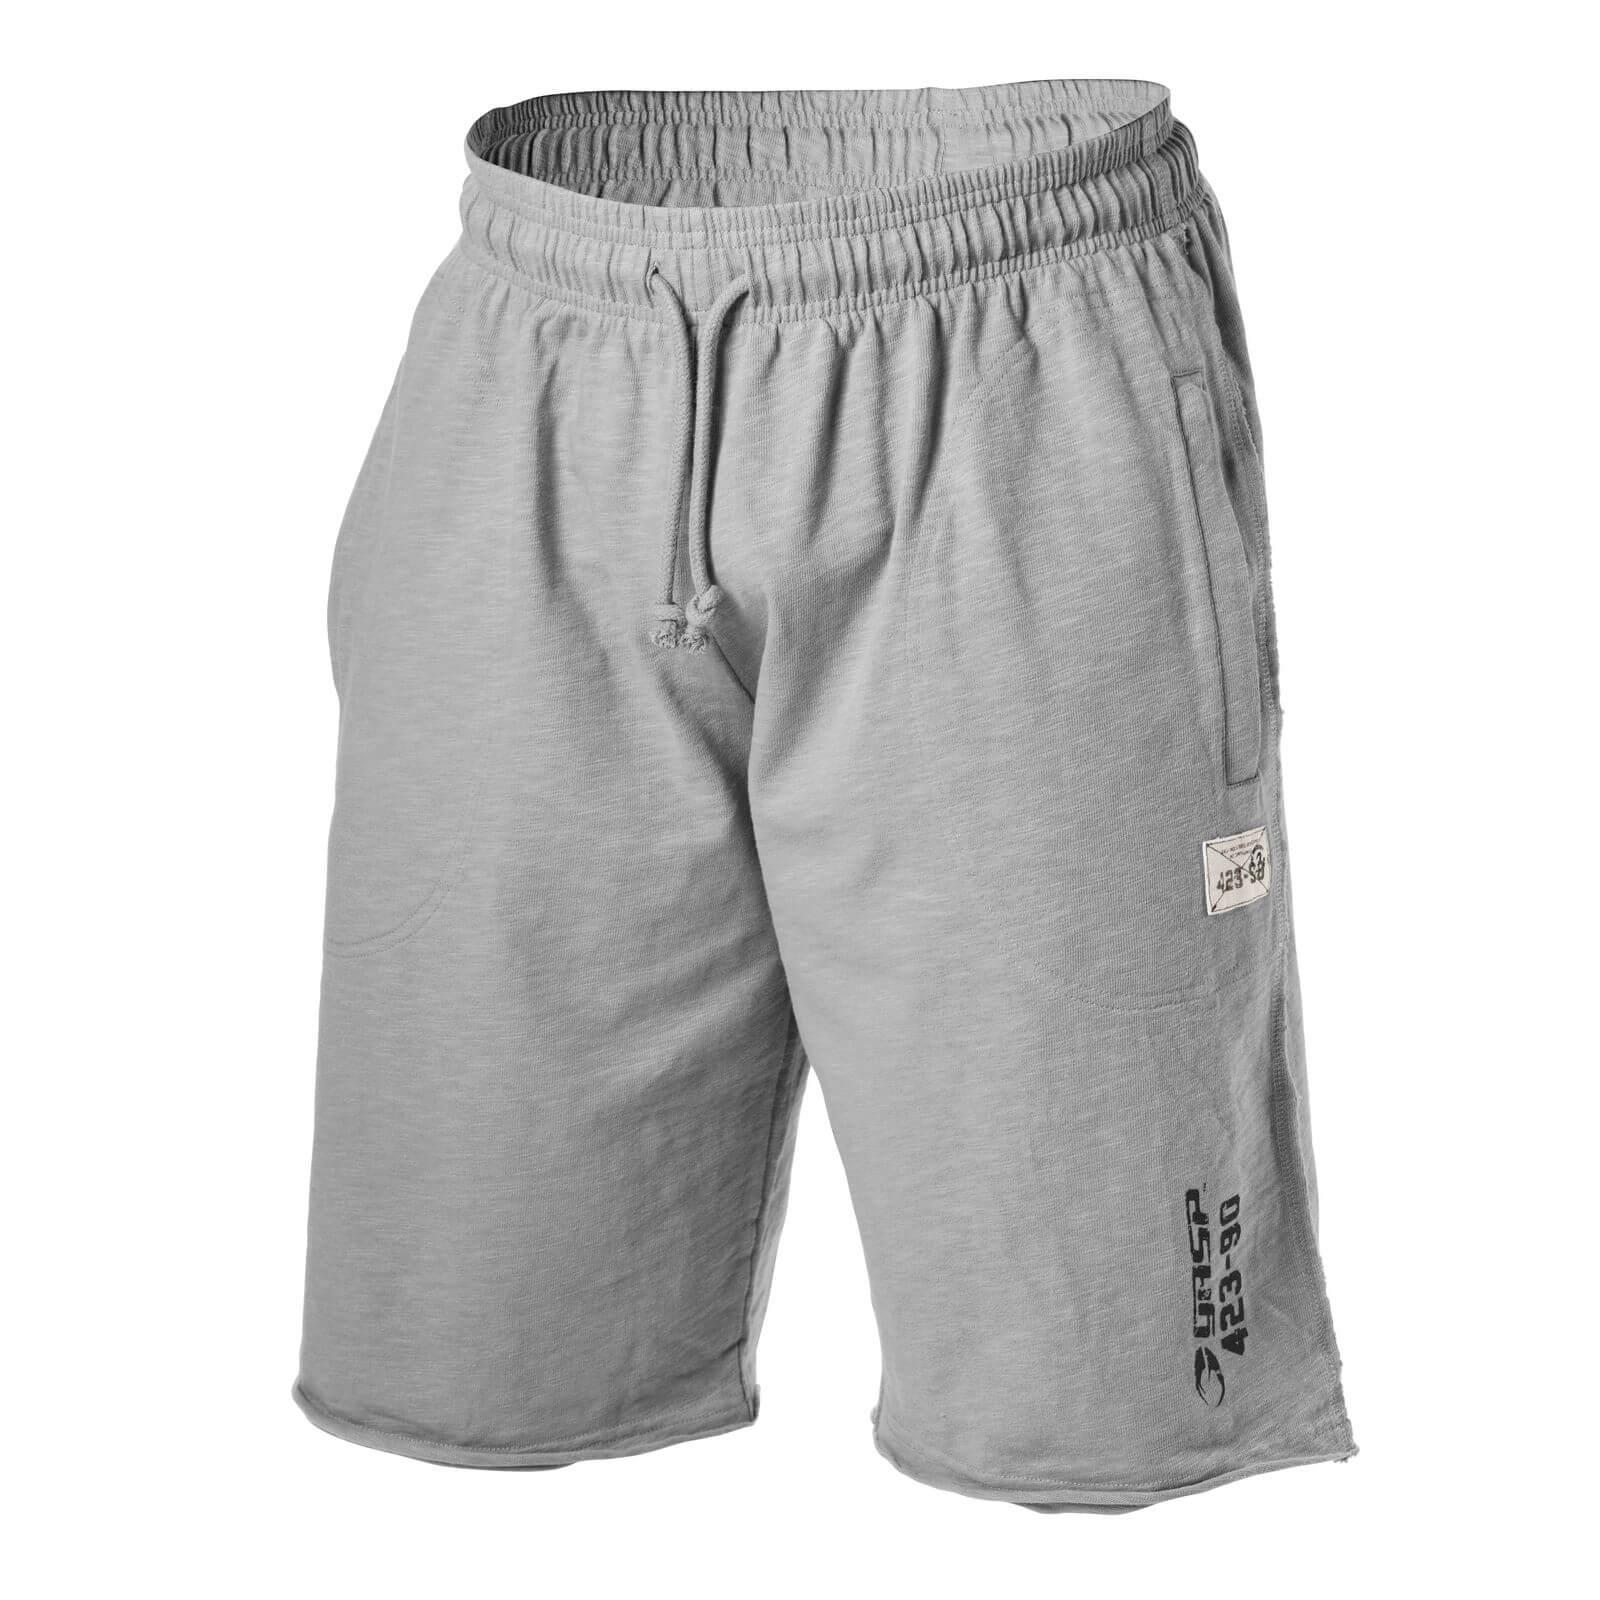 Throwback Sweat Shorts, light grey, GASP